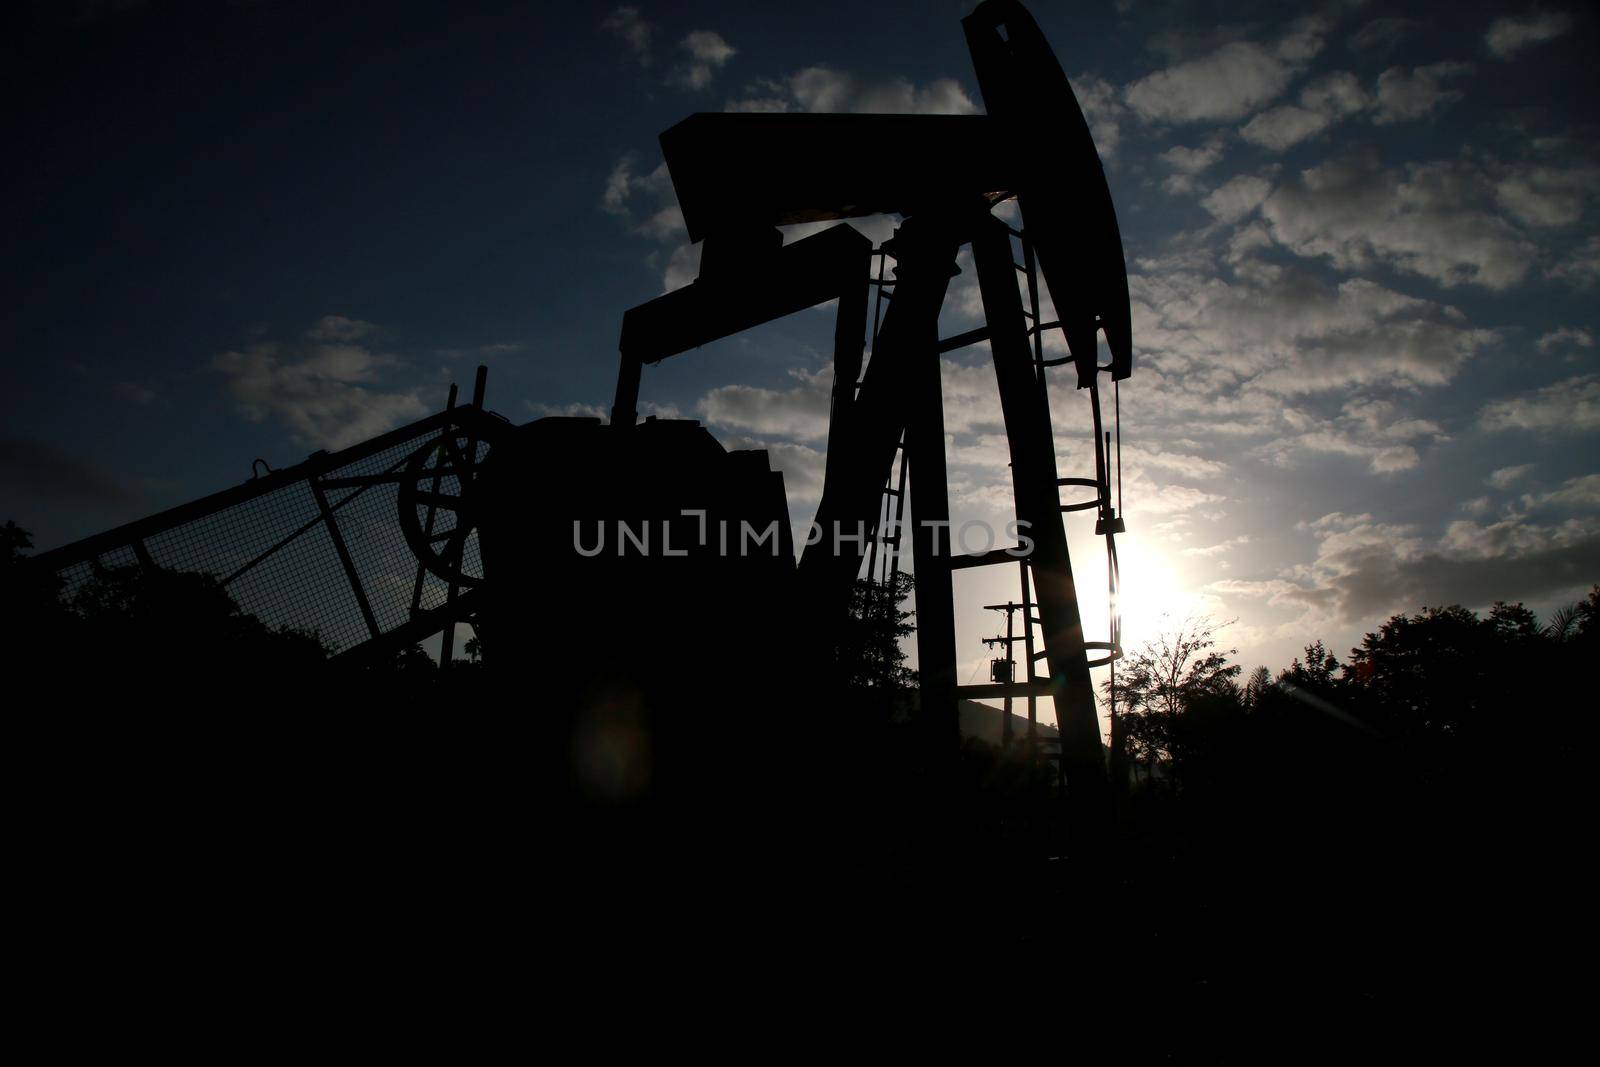 mata de sao joao, bahia / brazil - novembro 8, 2020: oil exploration machine is seen in Petrobras' field of action in the city of Mata de Sao Joao.